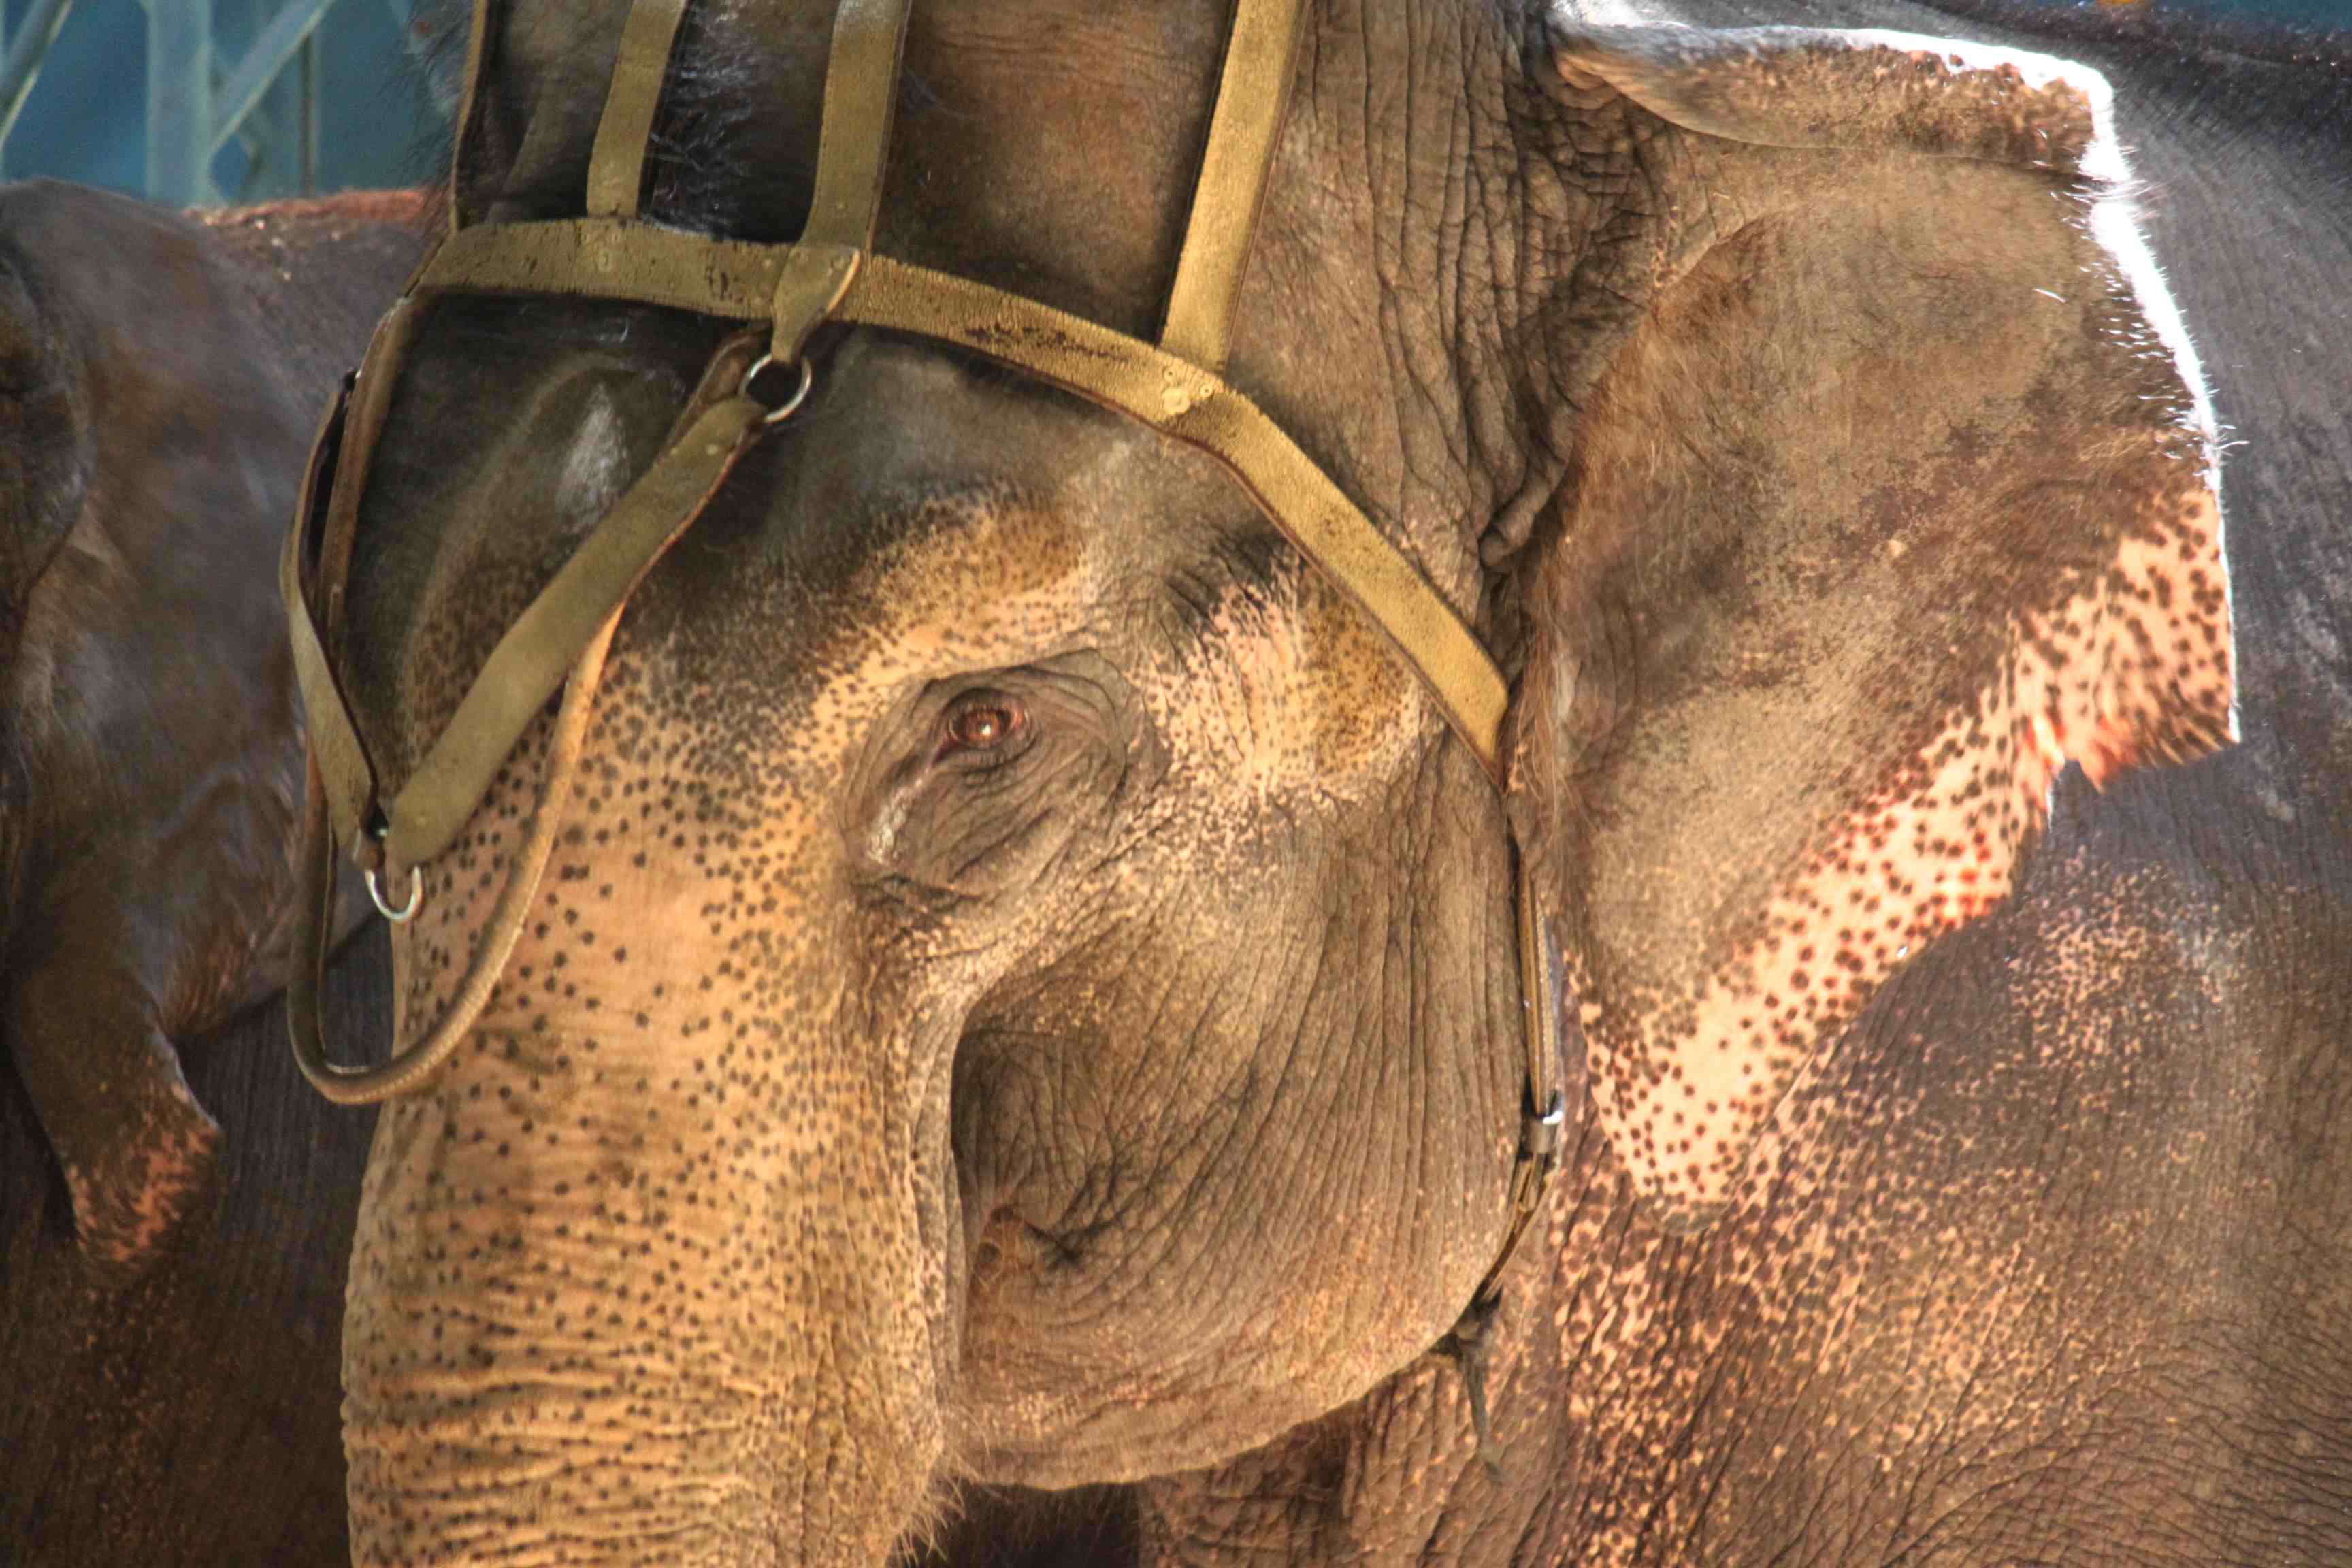 Close-up of an elephant's head